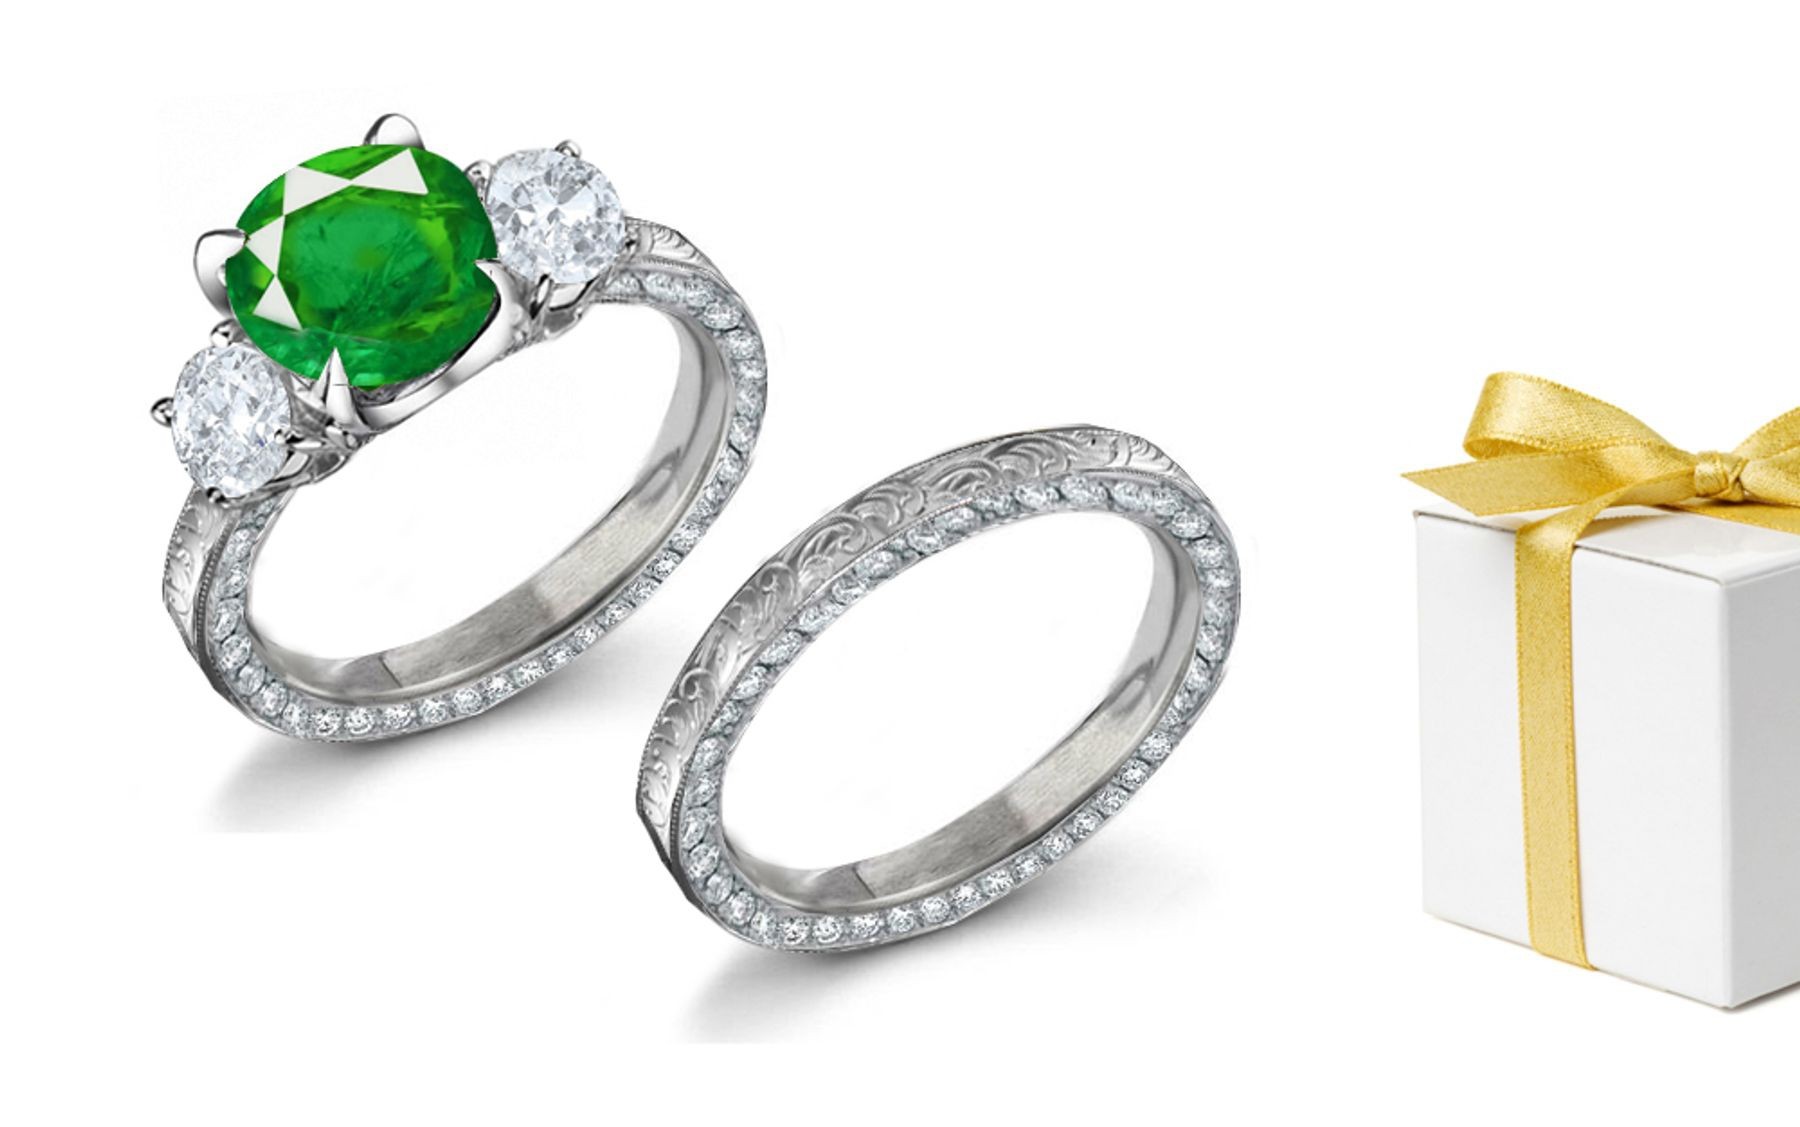 A Vintage Brazalian Emerald Diamond Engagement Ring & Gold Nature Foliate Scroll & Motifs Platinum Fashion Band